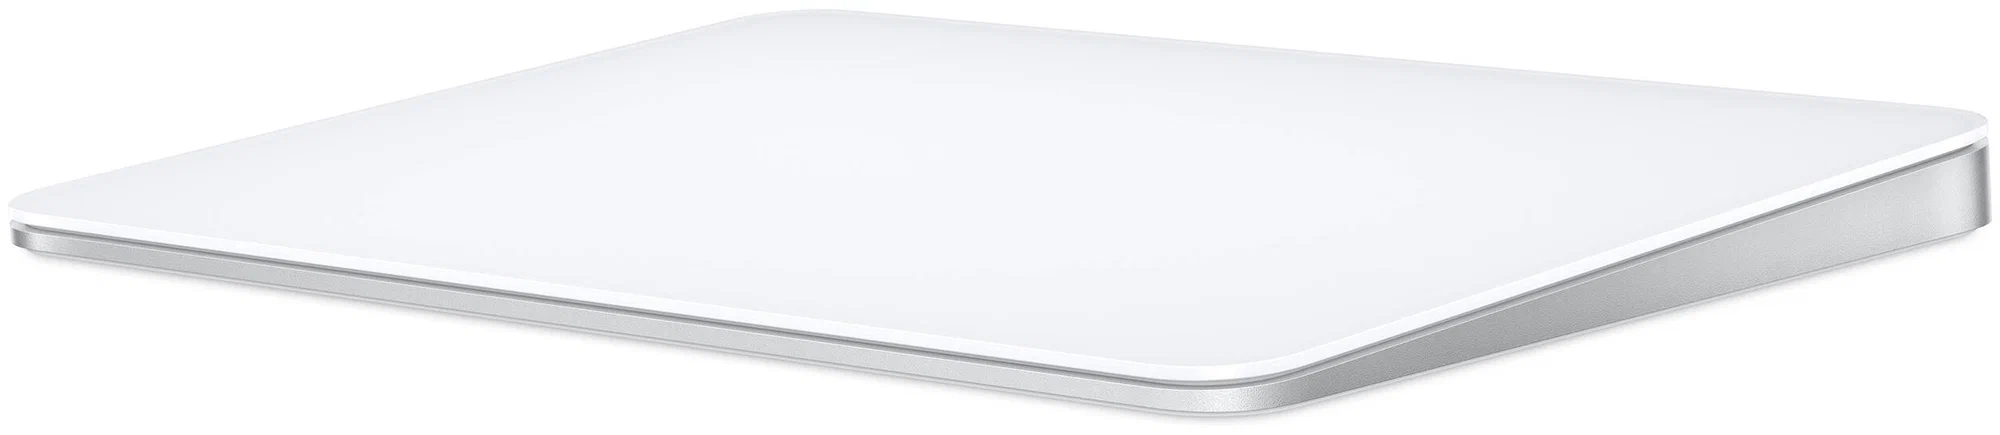 Трекпад Apple Magic Trackpad 3 - White Multi-Touch Surface (MK2D3)